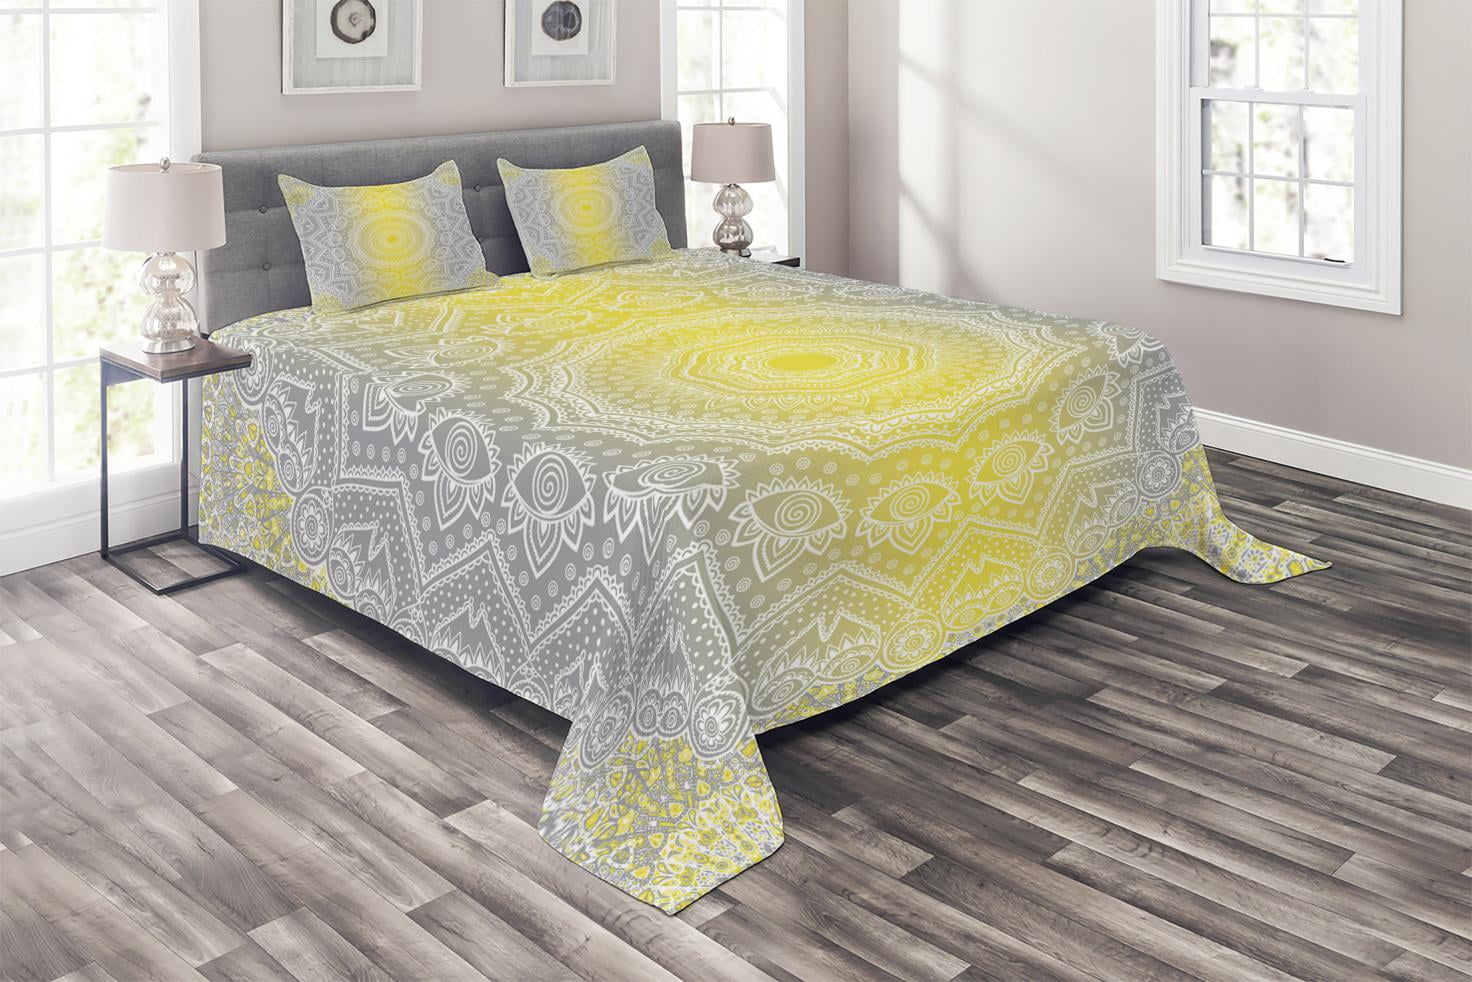 Decor Bedspread Set With 2 Pillow Shams, Boho King Size Bedspread